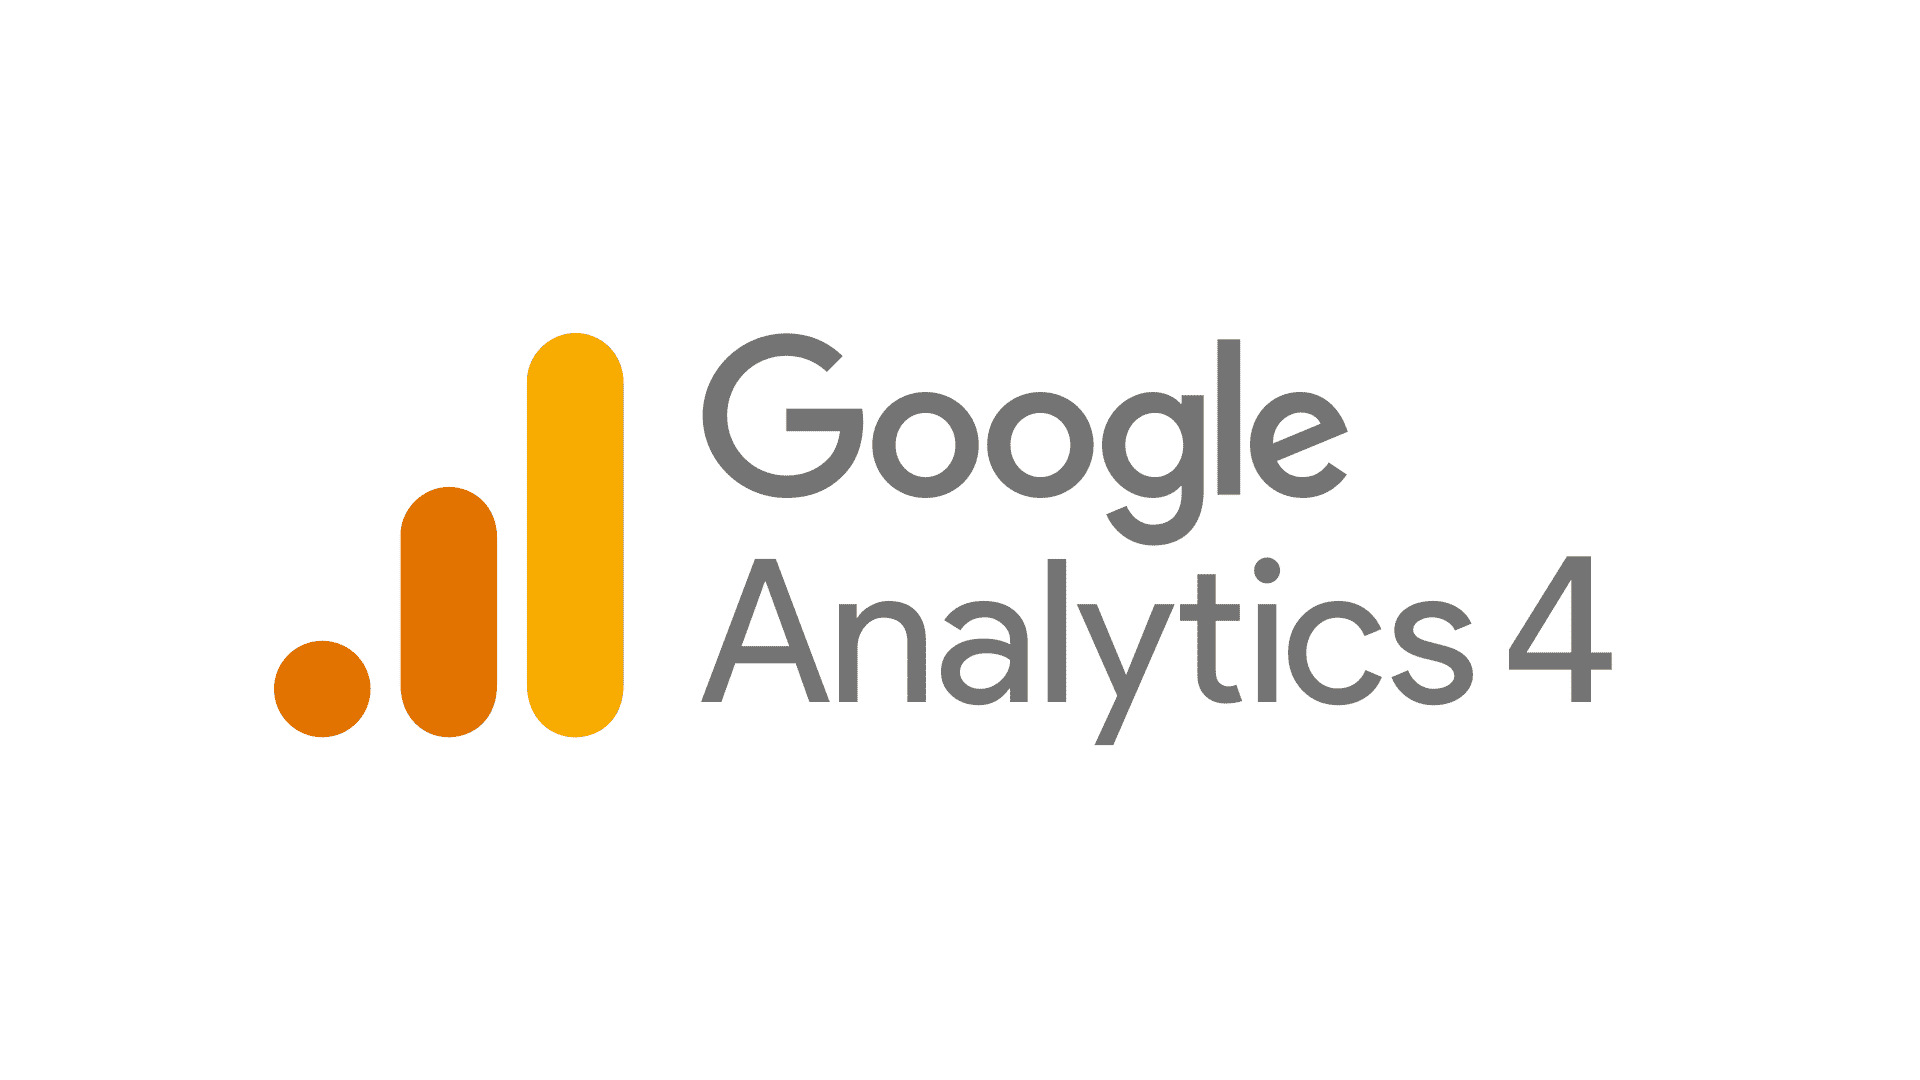 Integration with Google Analytics 4